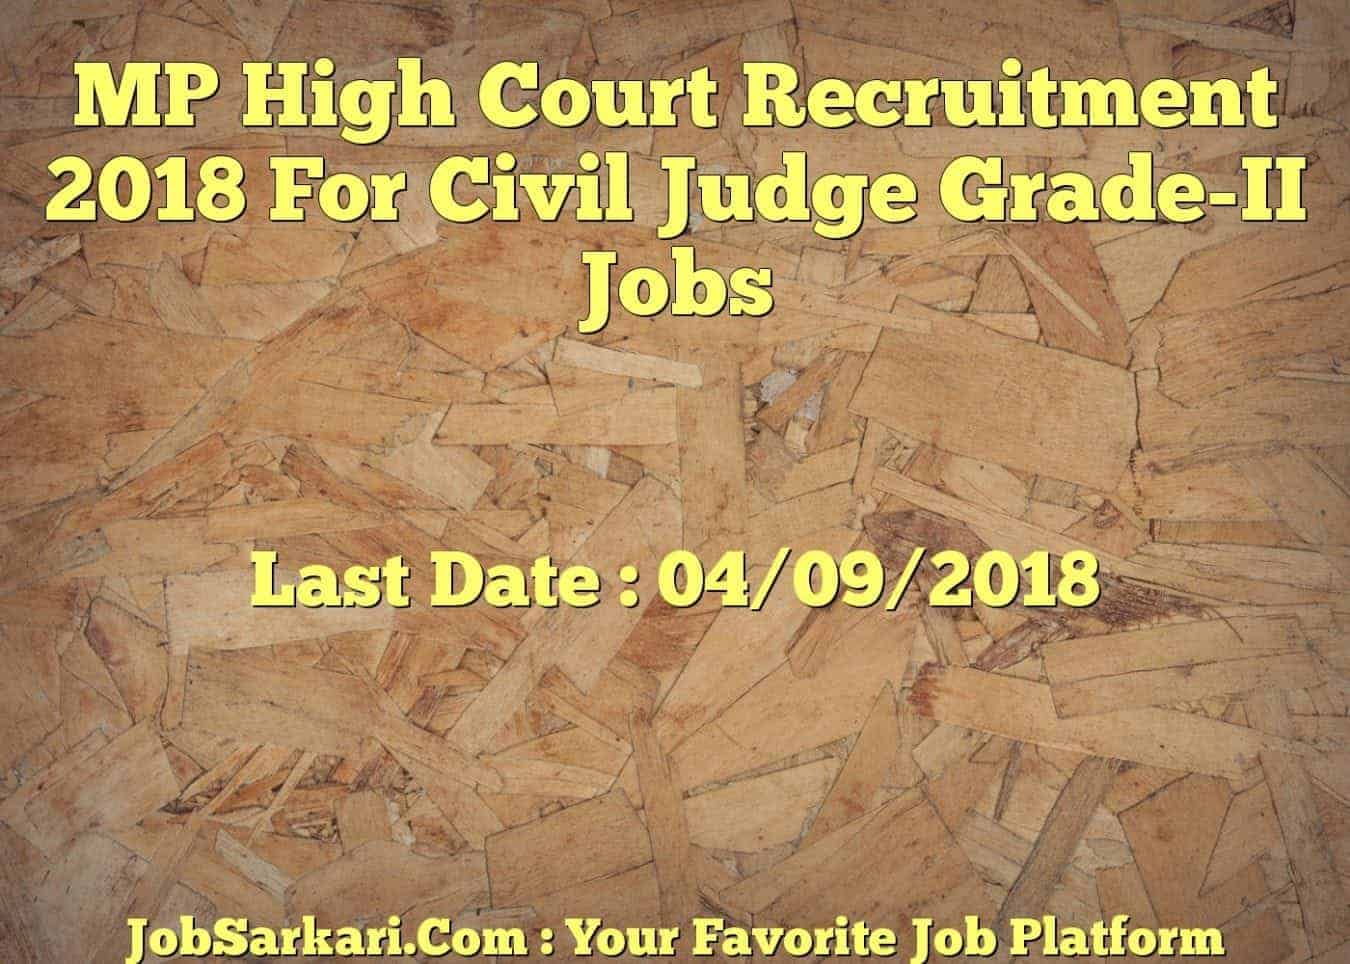 MP High Court Recruitment 2018 For Civil Judge Grade-II Jobs